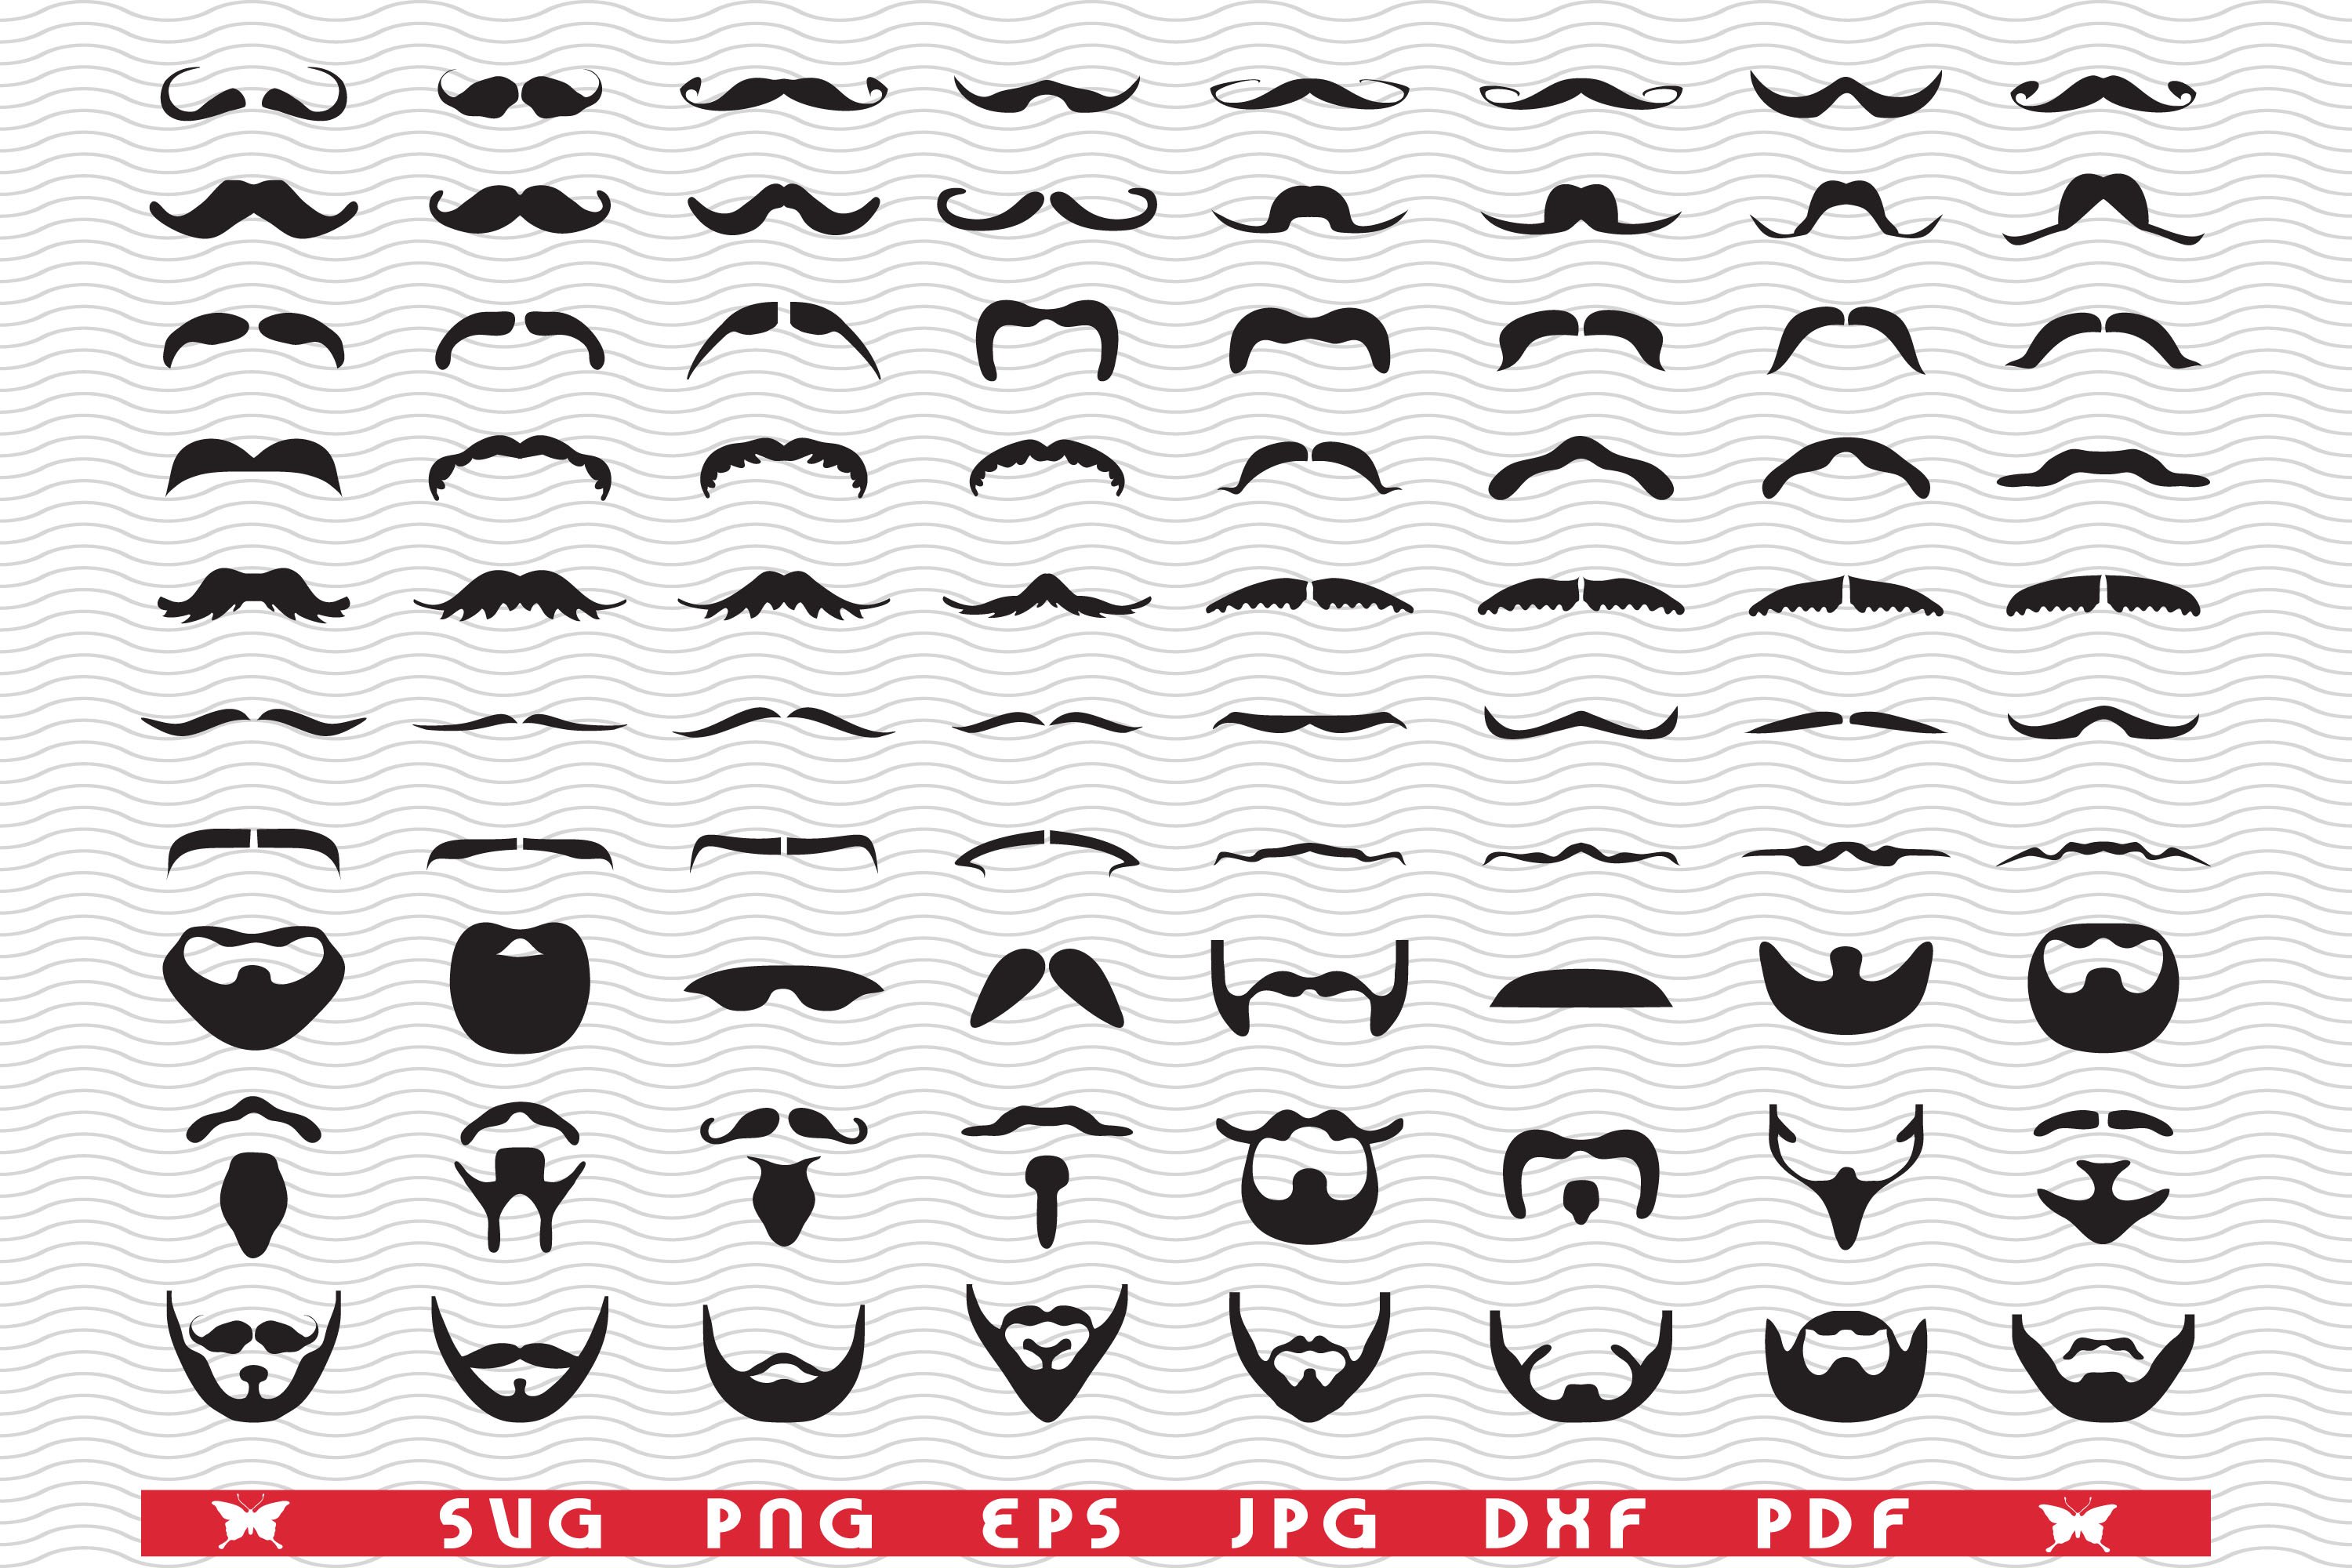 SVG Beard,Moustache,Black Silhouette cover image.